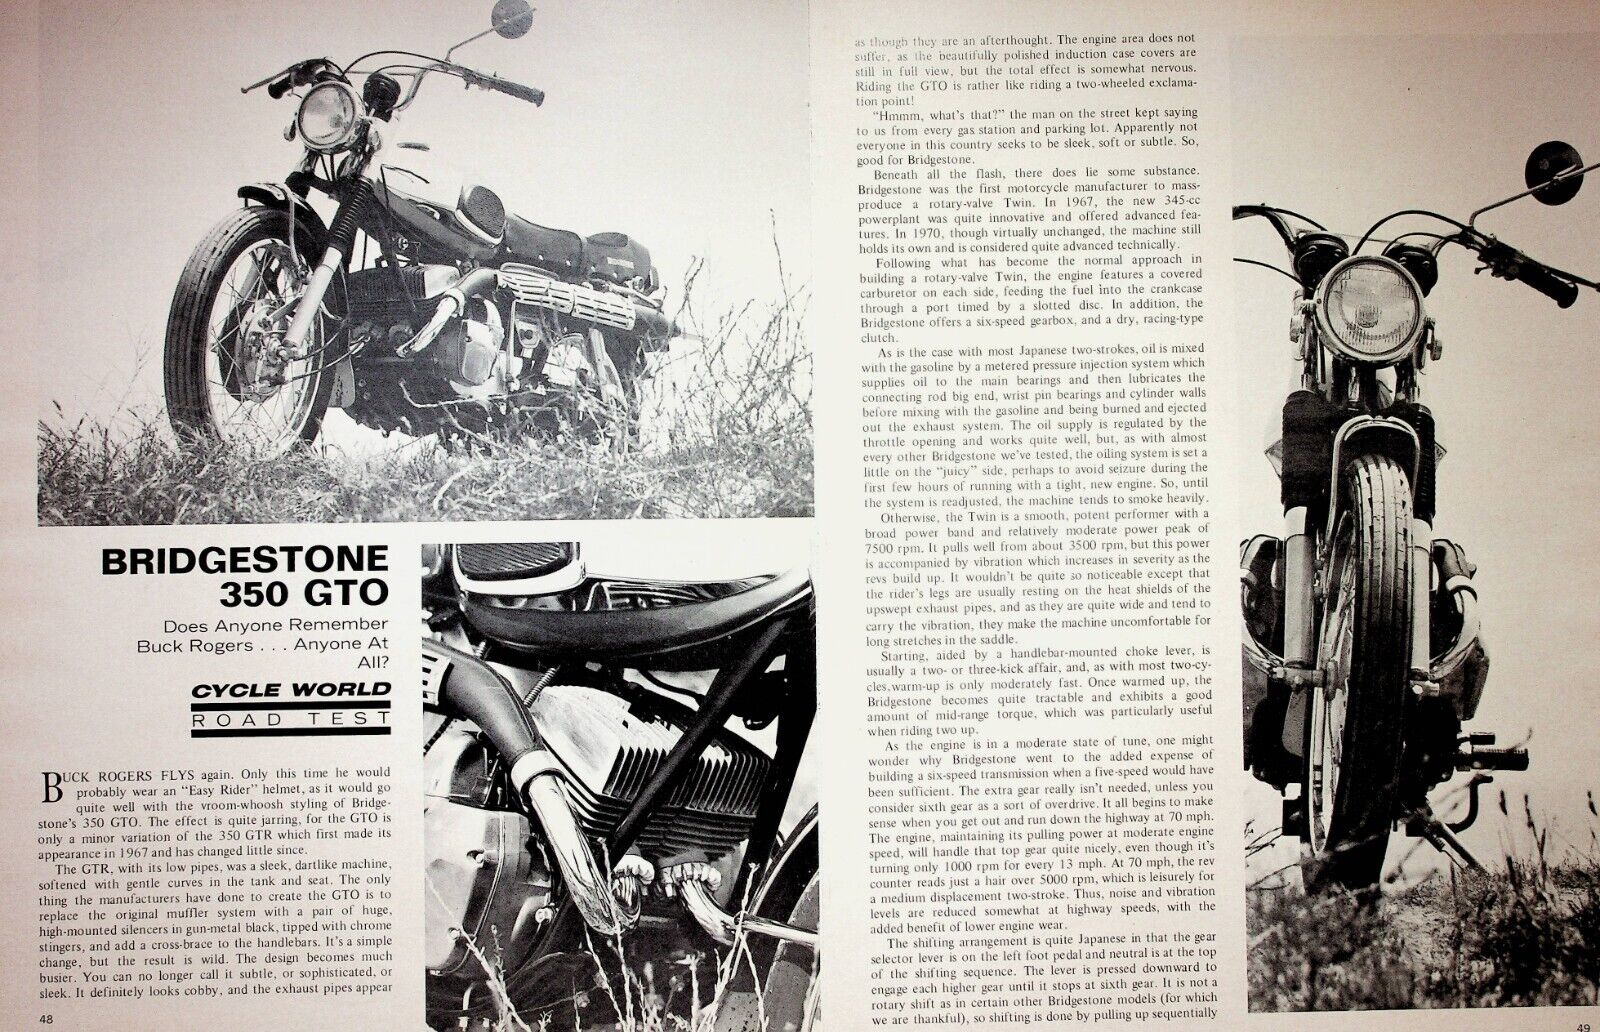 1970 Bridgestone 350 GTO Motorcycle - 4-Page Vintage Road Test Article